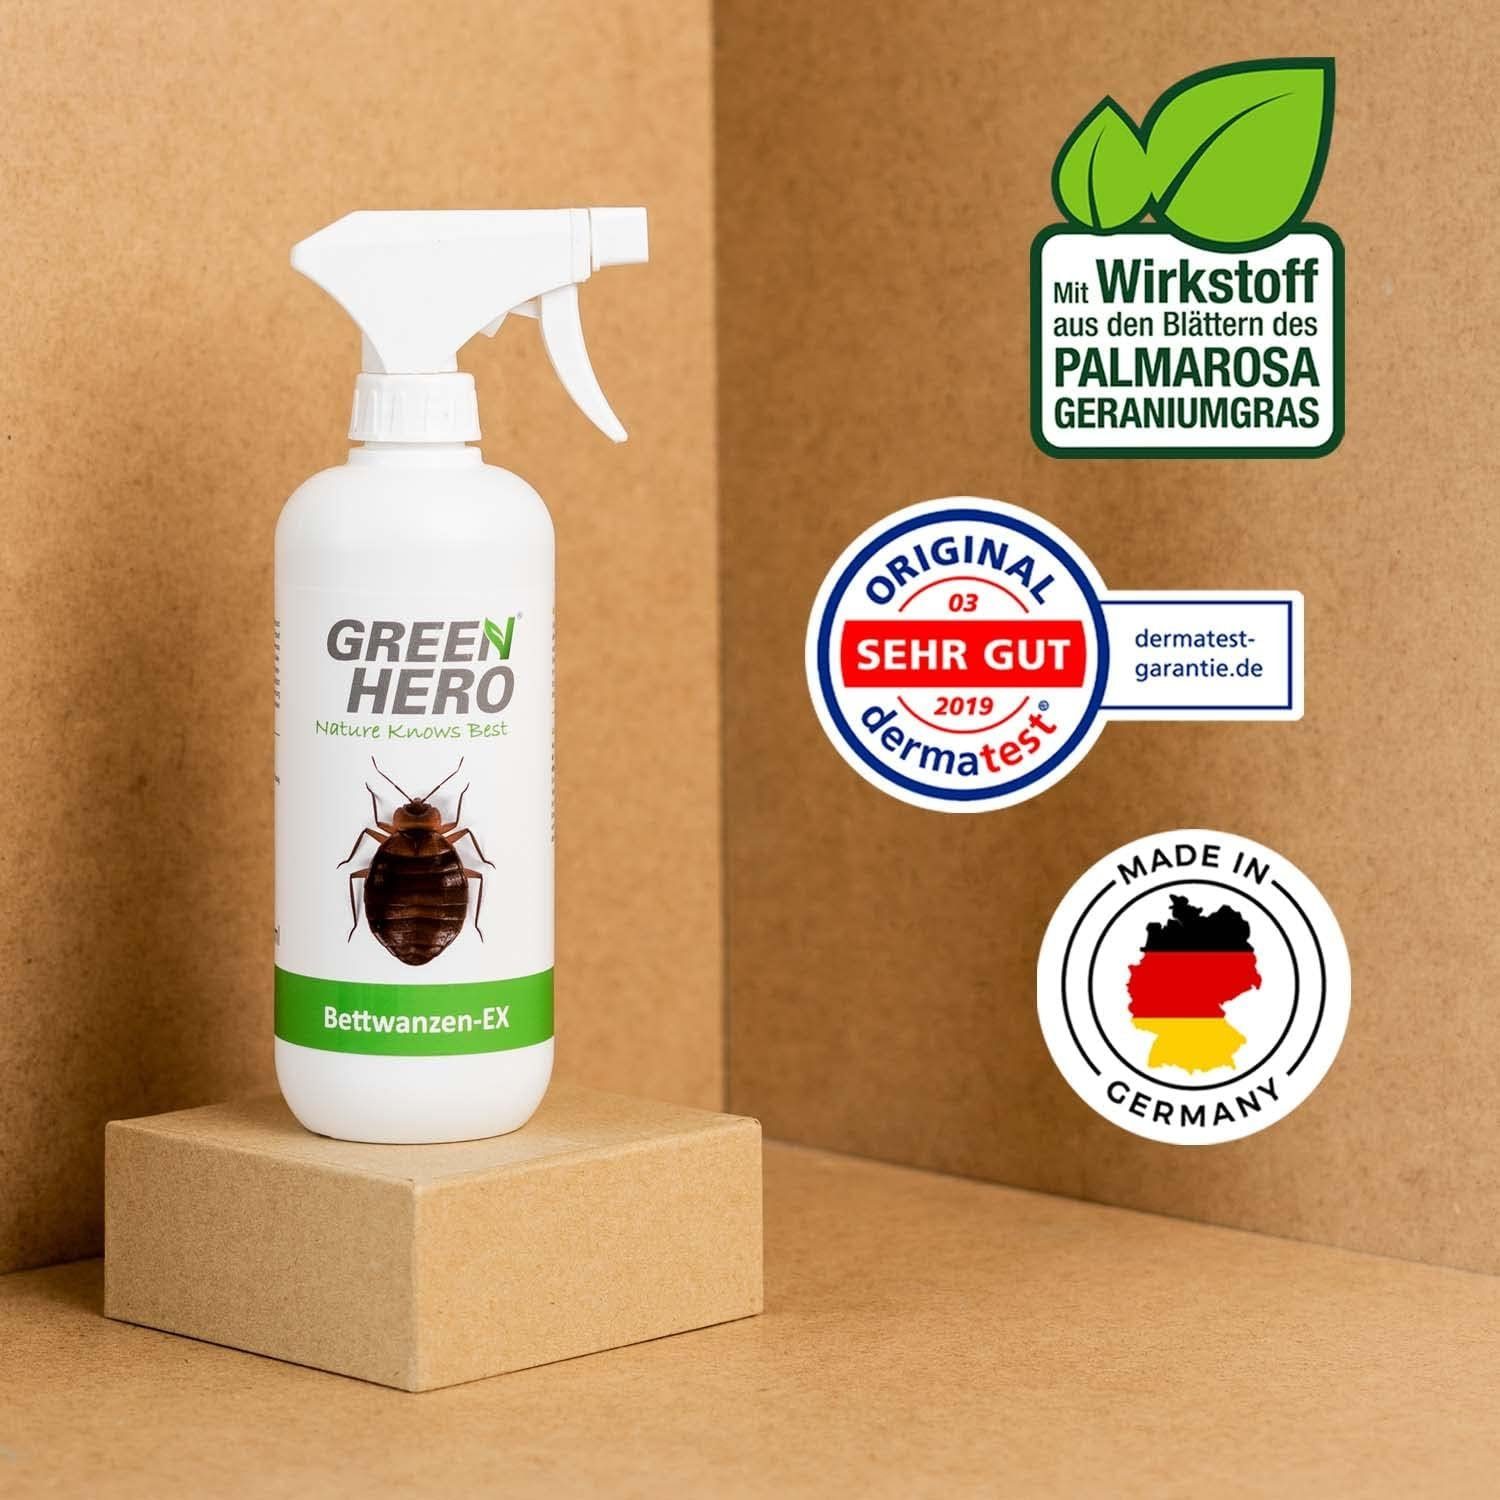 Insektenspray Bettwanzenbekämpfung, zur 500 GreenHero Mittel Spray ml, Bettwanzen-Ex Bettwanzen